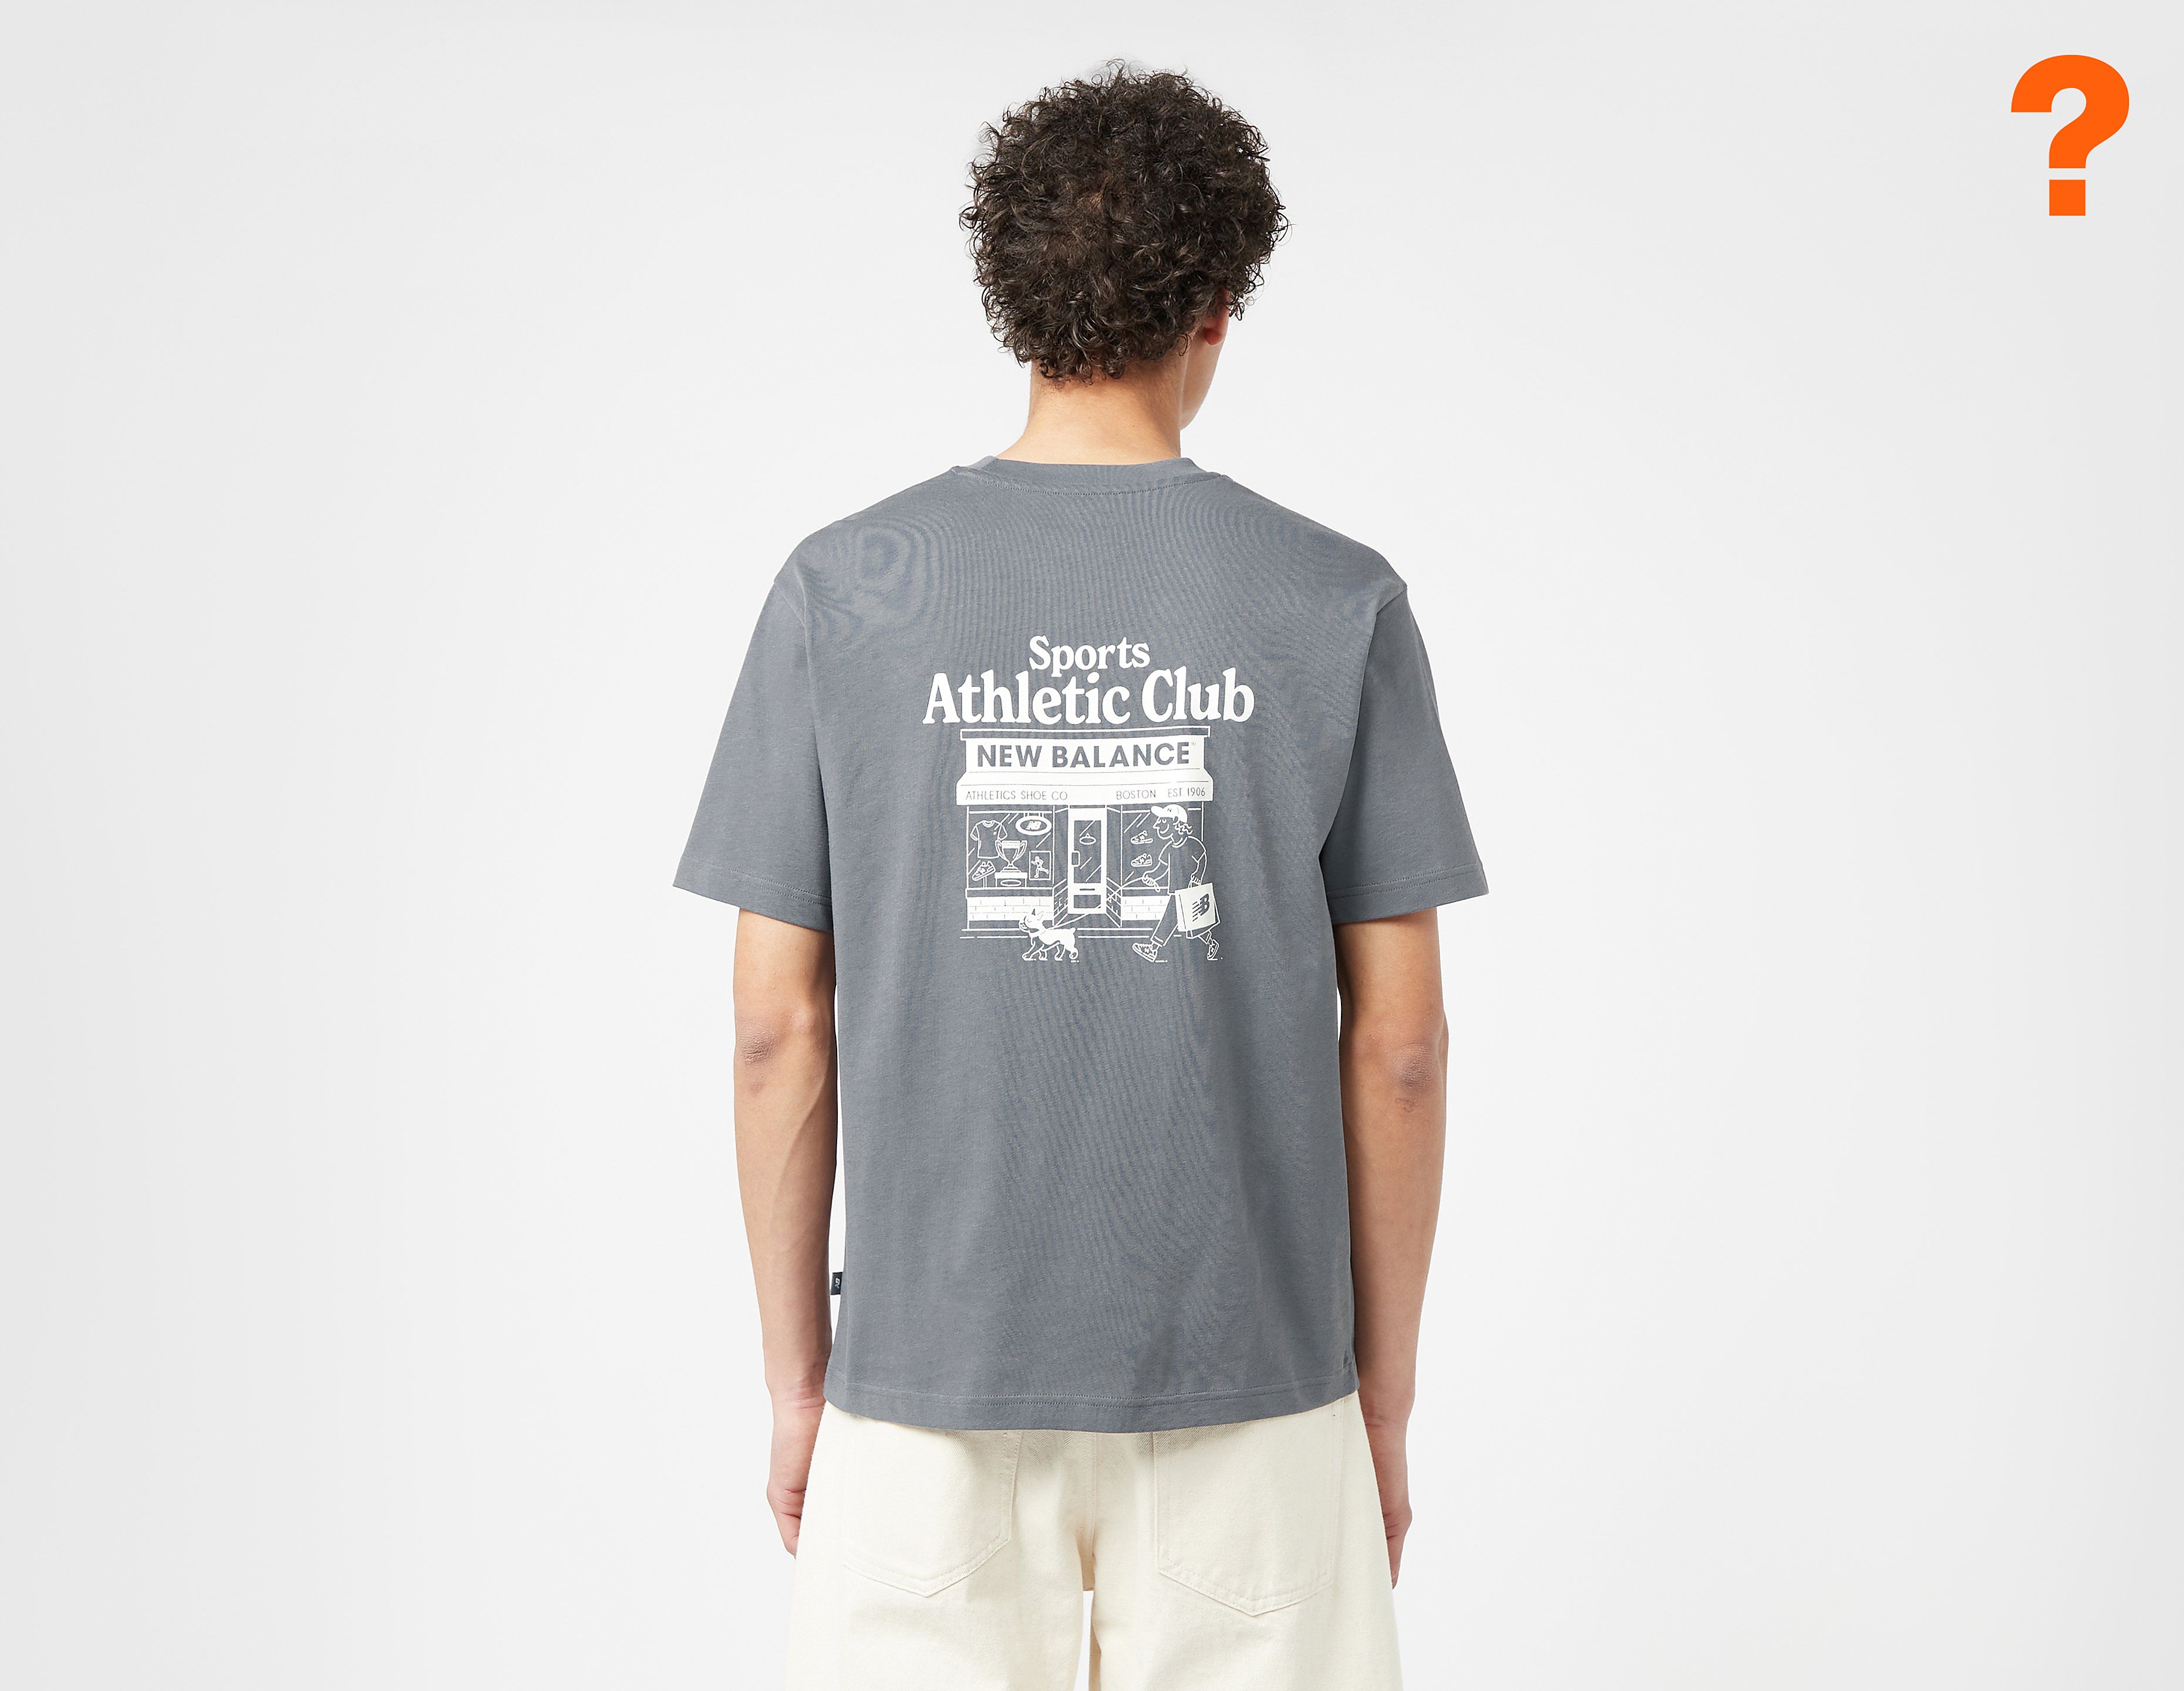 New Balance Athletics Club T-Shirt - size? exclusive, Grey